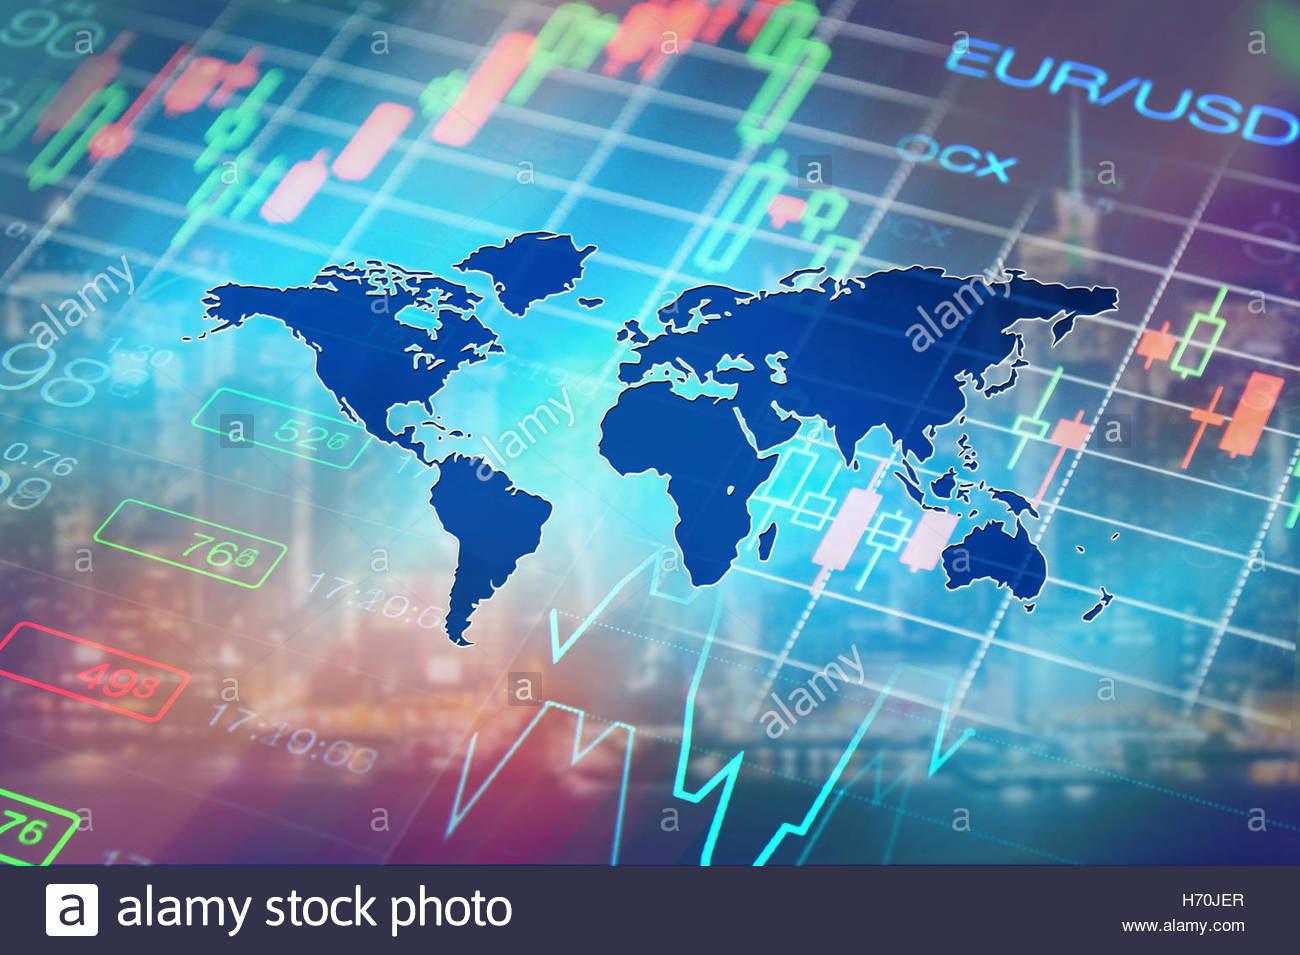 Global Economy Finance Forex Financial Markets News Background